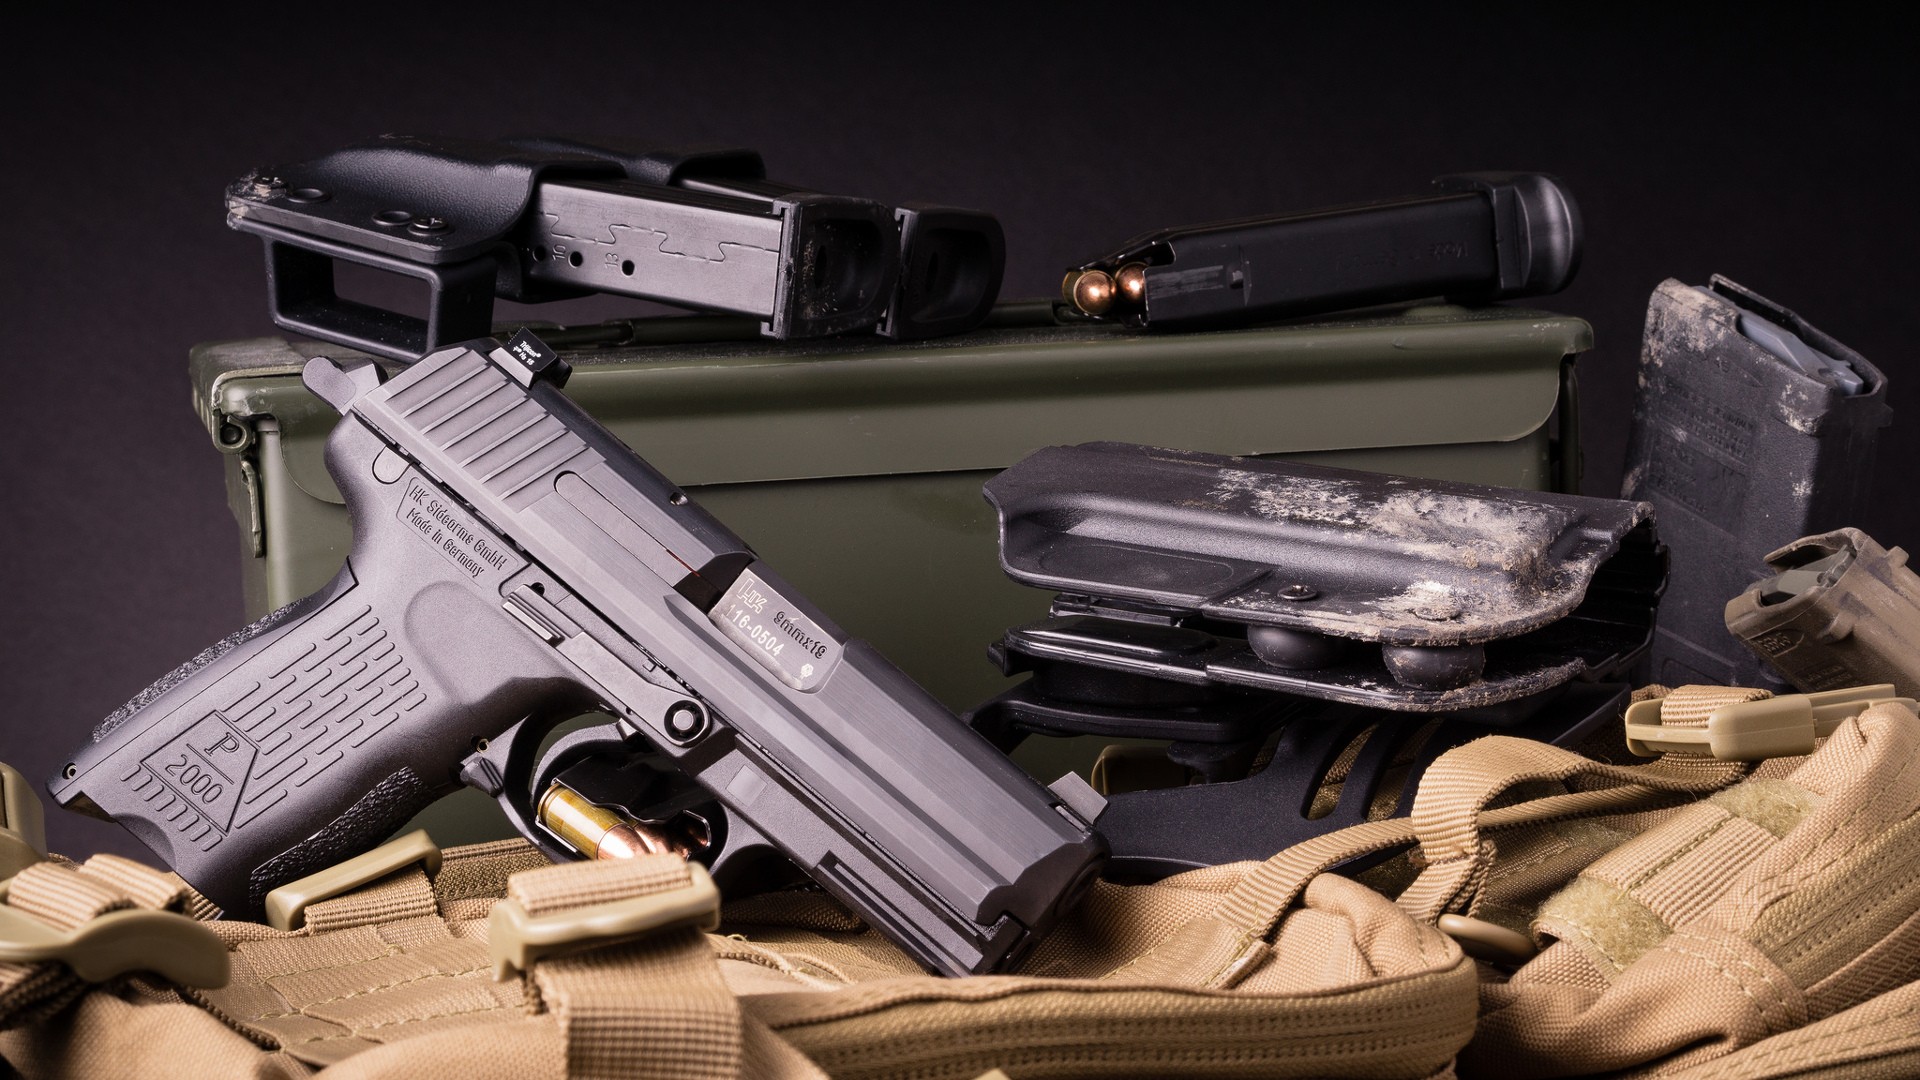 General 1920x1080 gun pistol Heckler & Koch Heckler & Koch P2000 weapon 9 mm German firearms